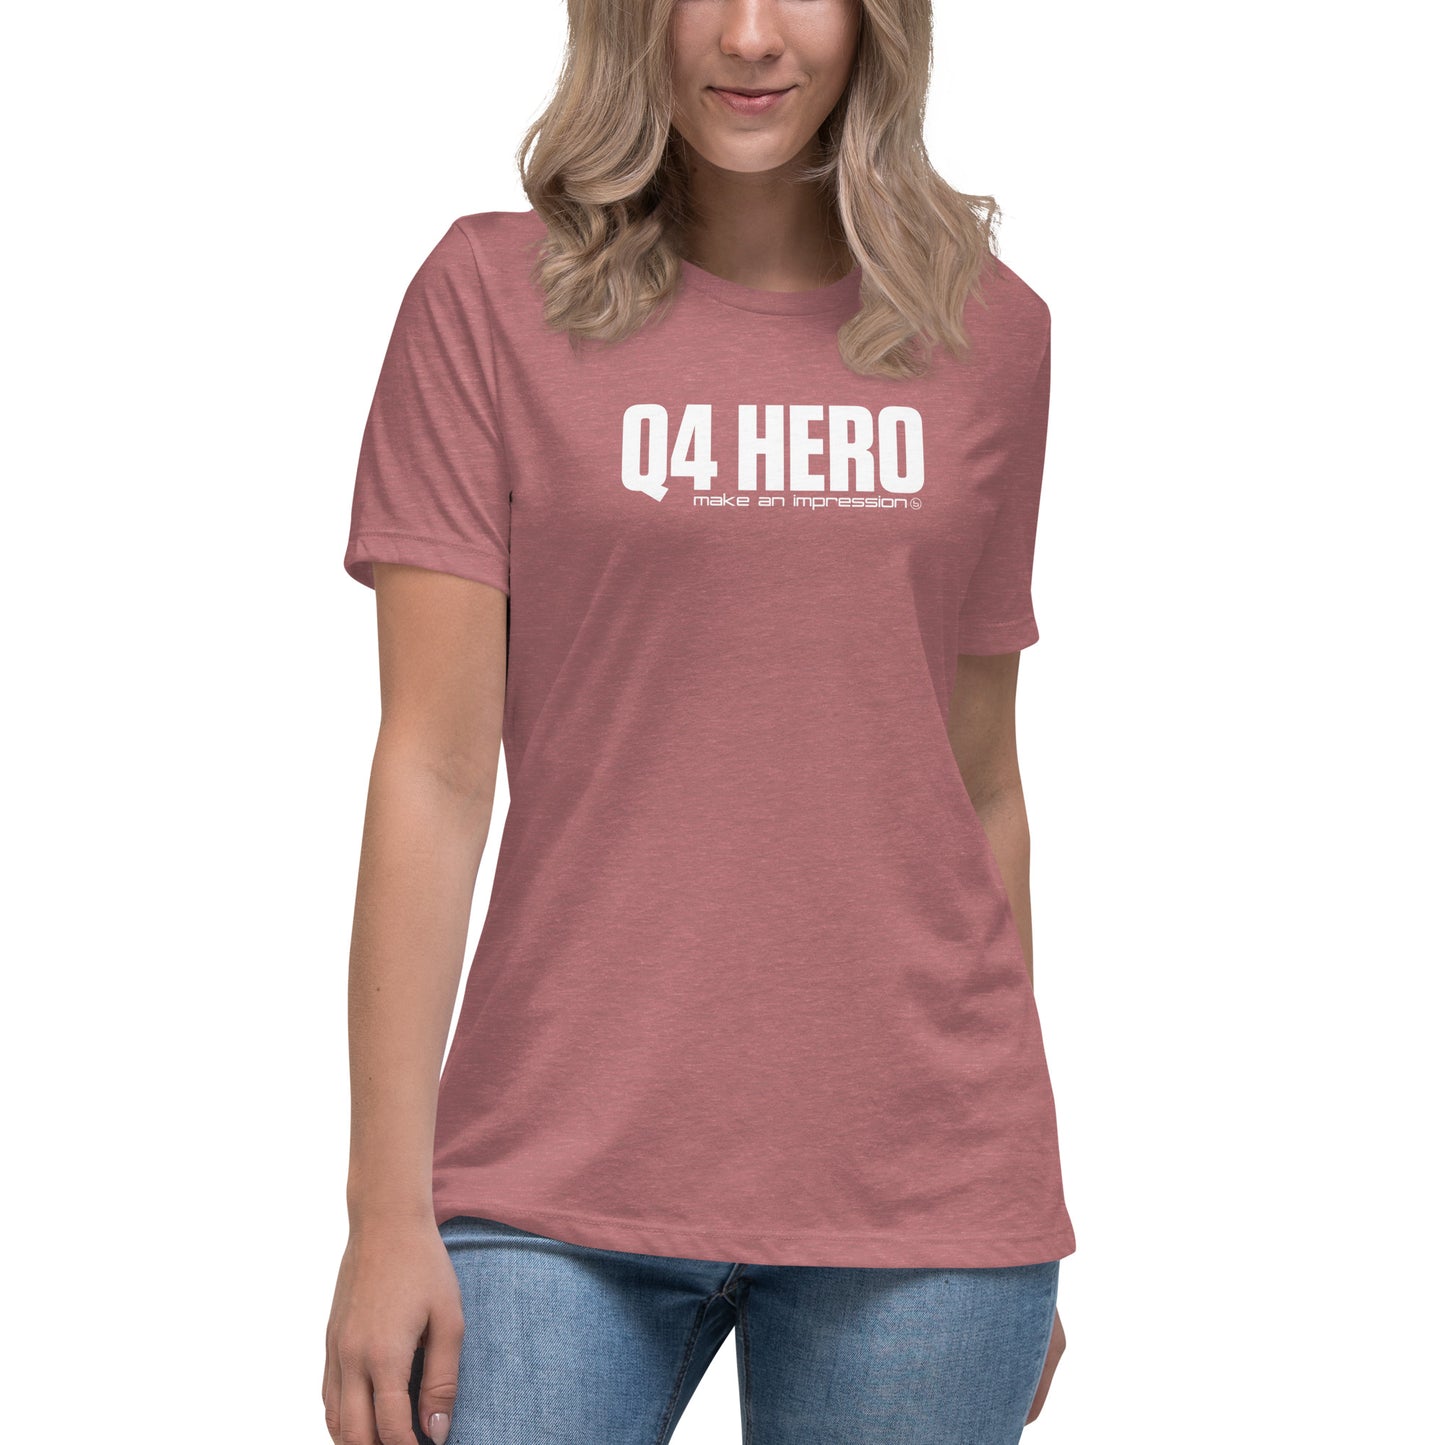 Q4 HERO T-Shirt - Women's Relaxed Cut - White